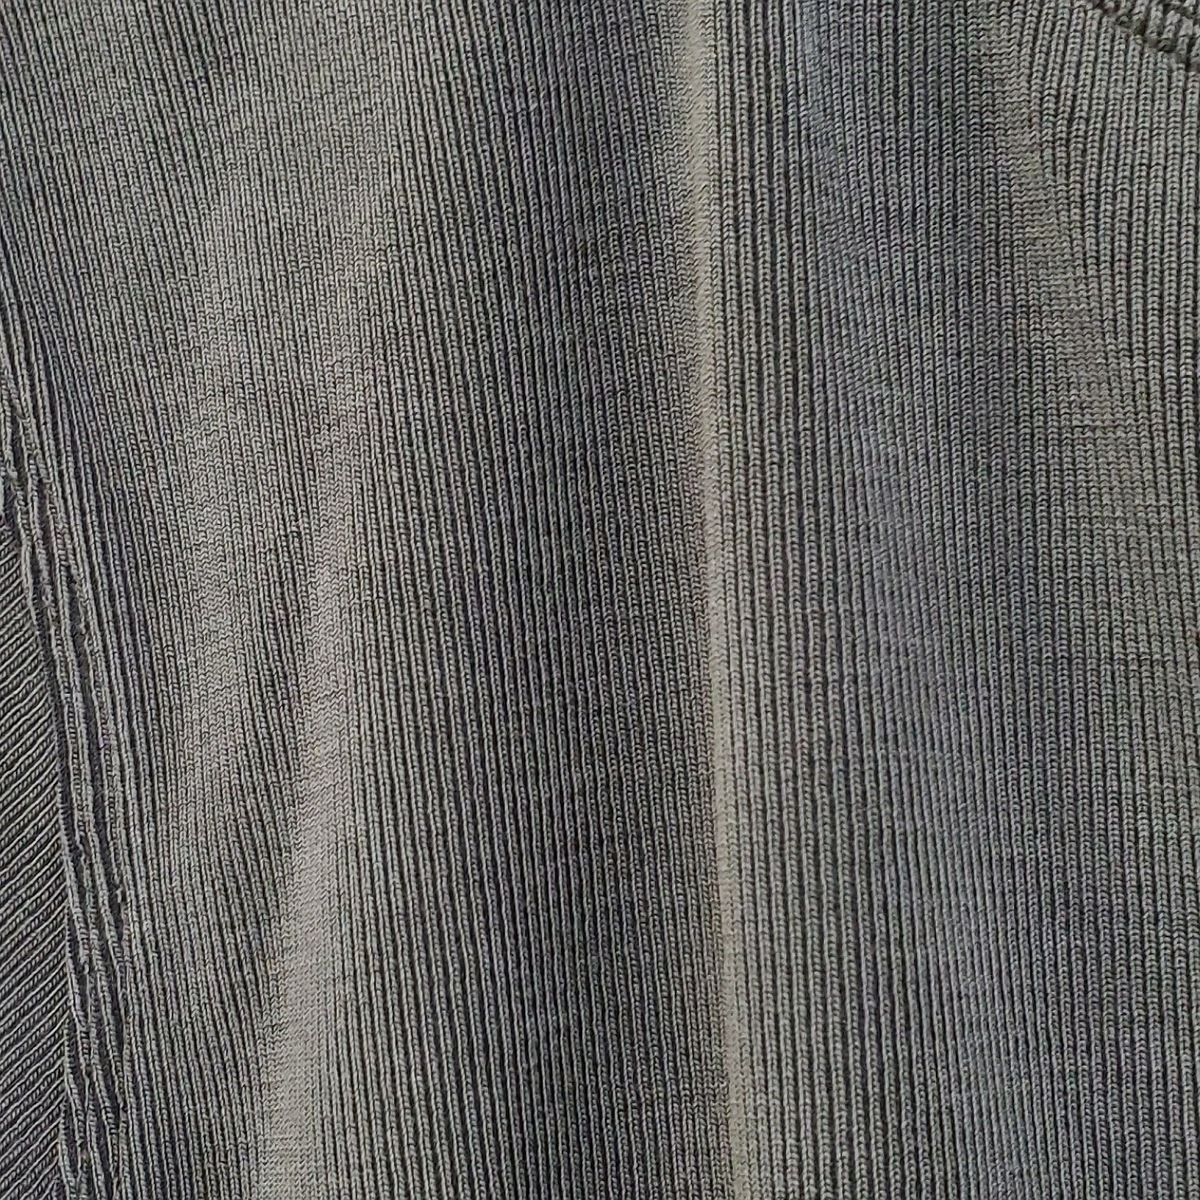 lululemon(ルルレモン) 長袖Tシャツ サイズ8 M レディース美品 - グレー クルーネック - メルカリ